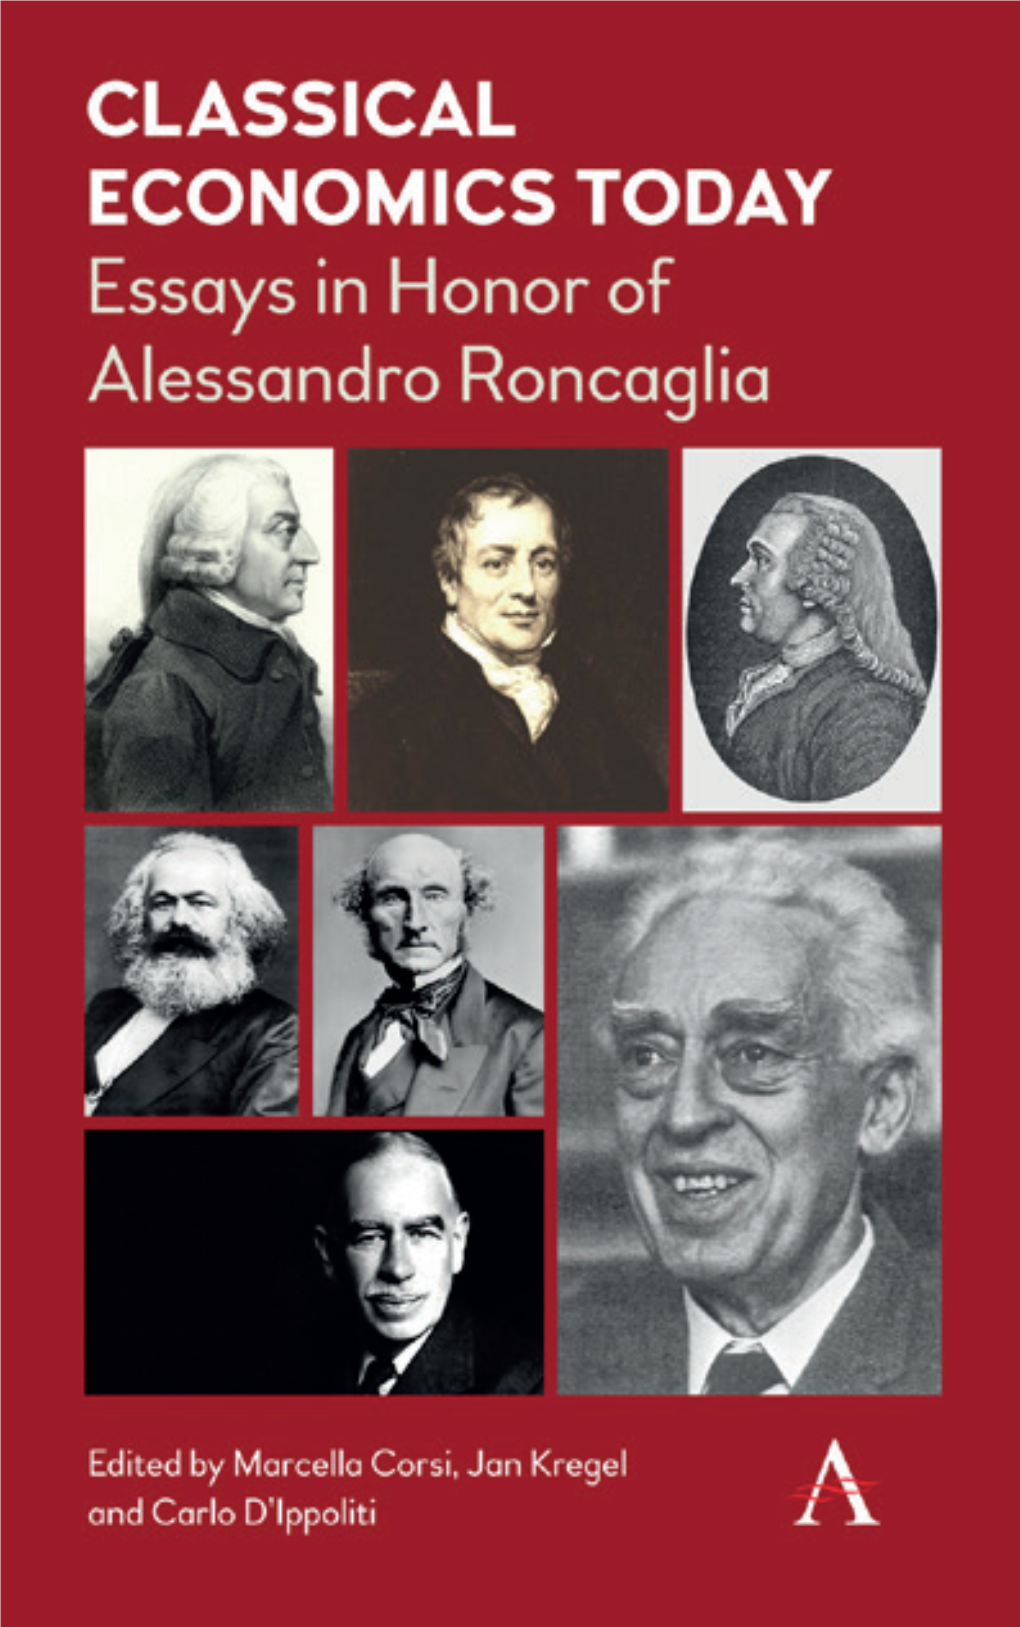 Classical Economics Today: Essays in Honor of Alessandro Roncaglia